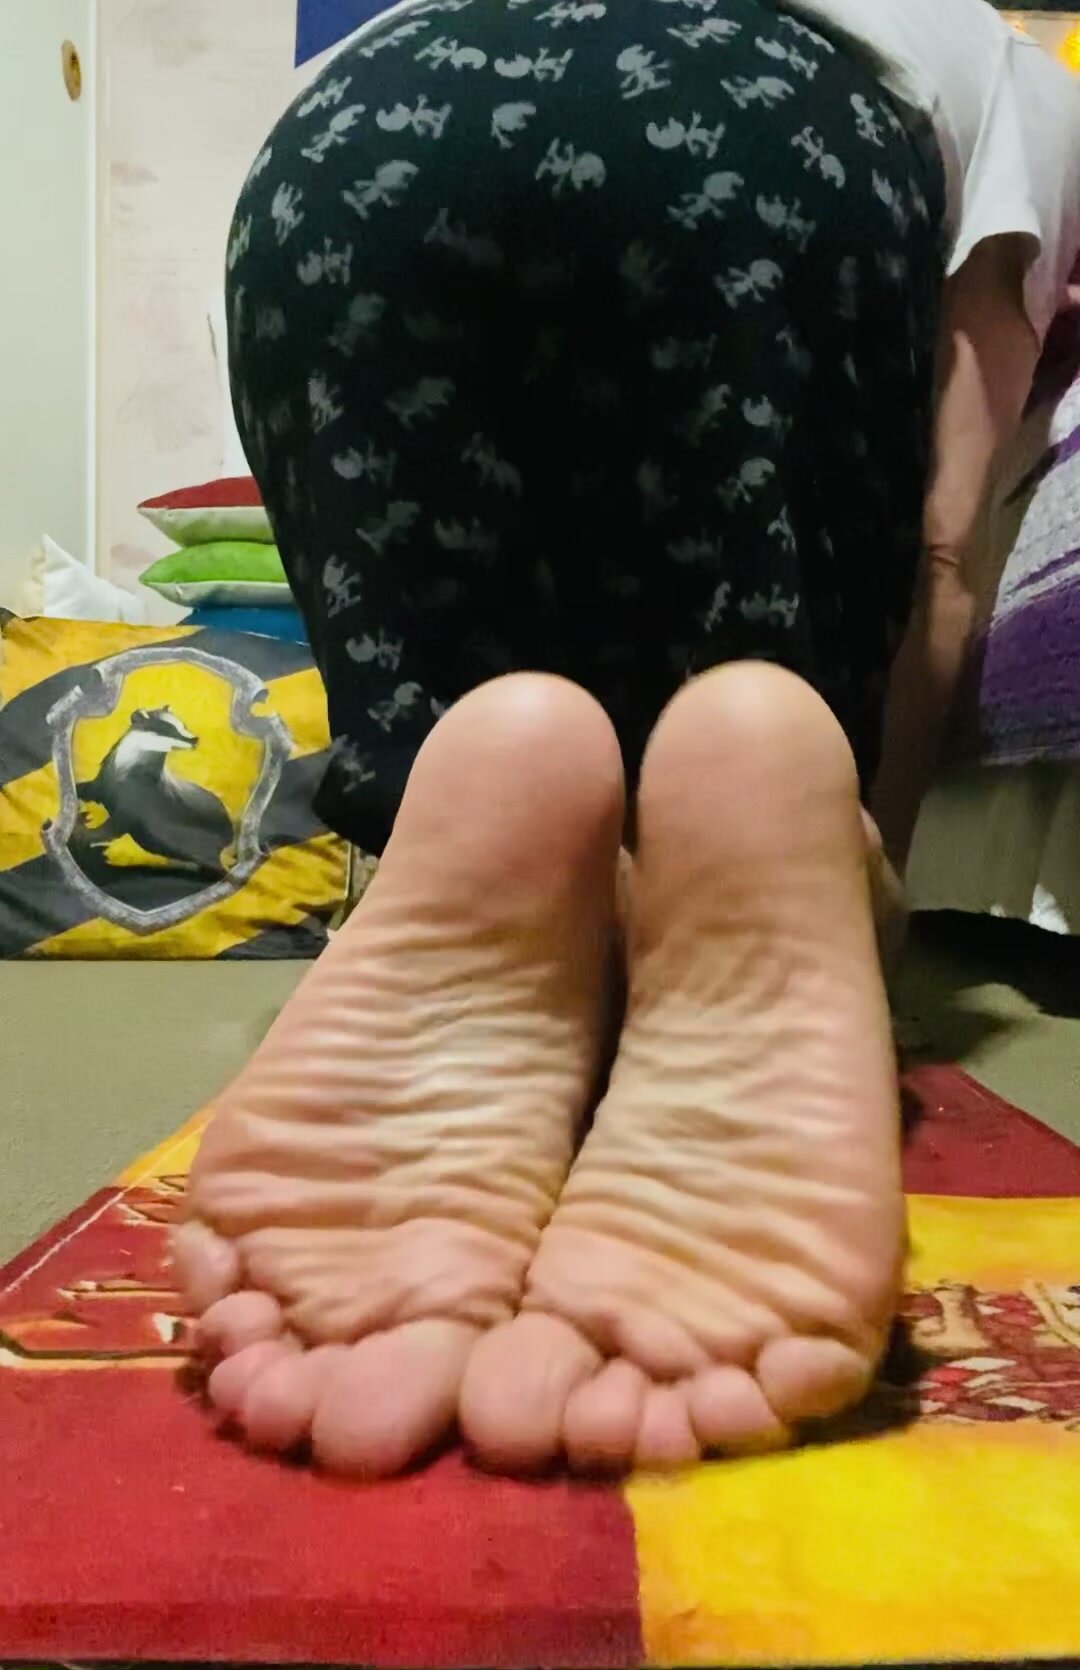 Feet feet more feet!